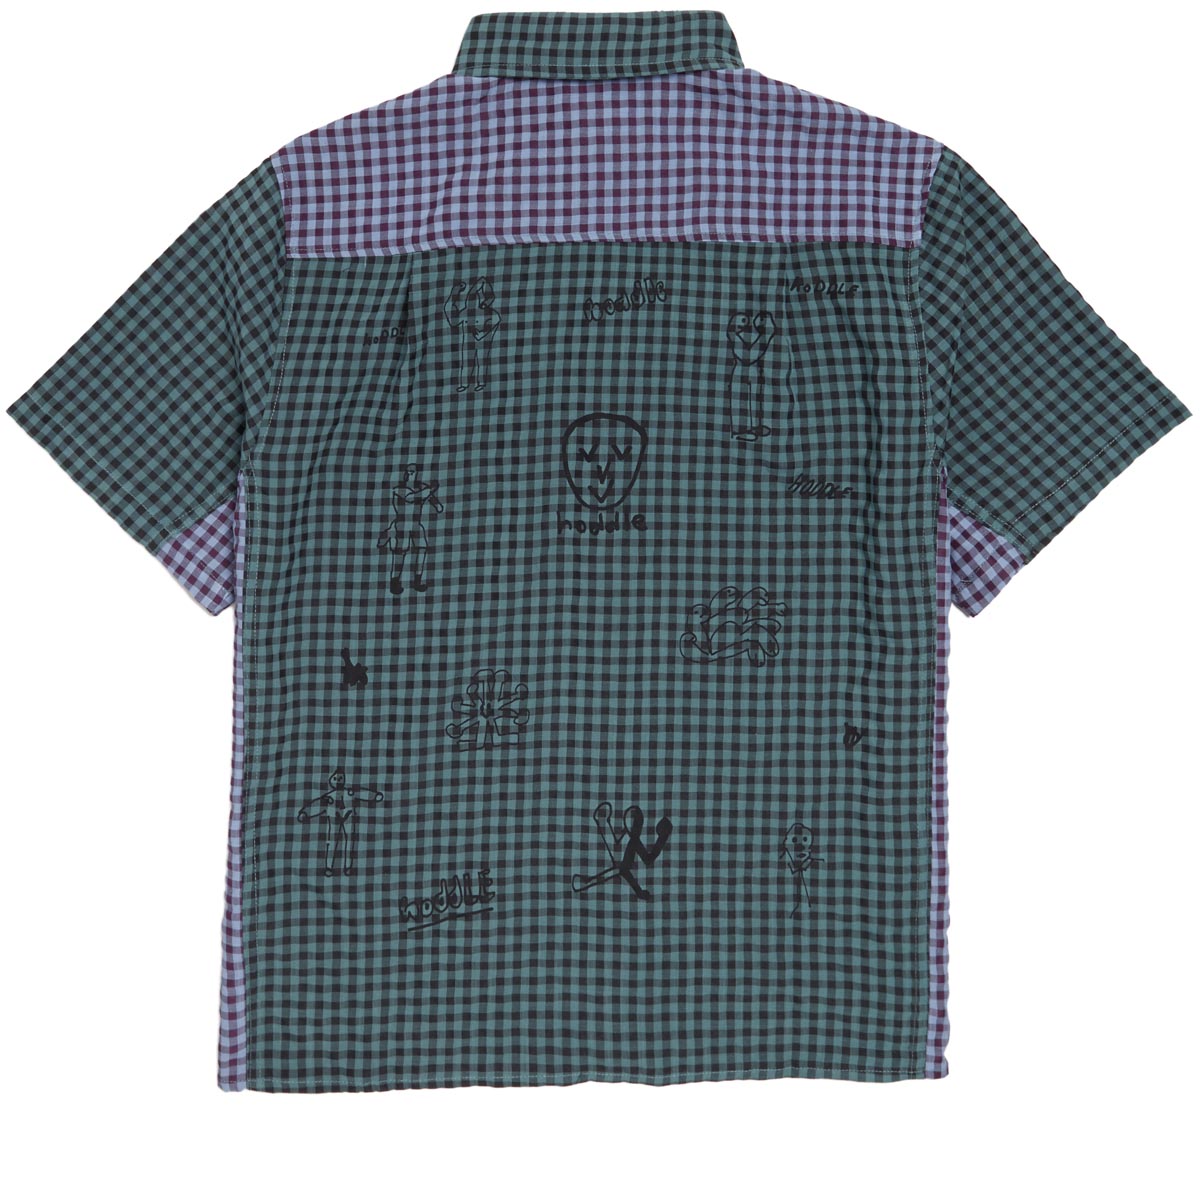 Hoddle Tour Shirt - Blue/Green Check image 2